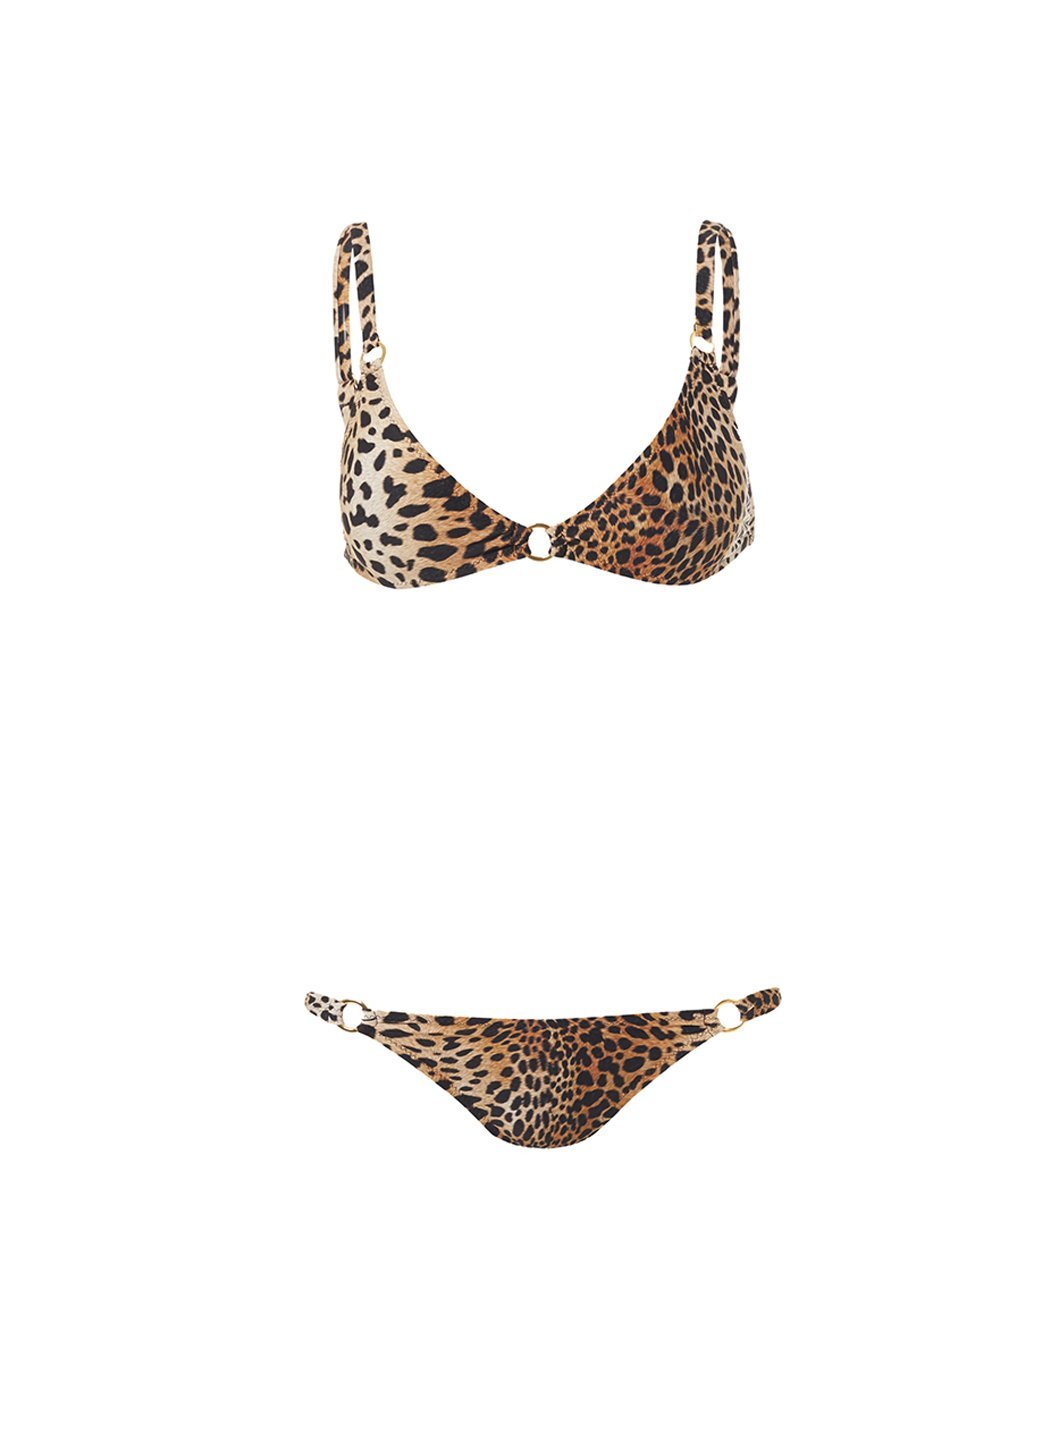 montenegro cheetah bralette ring bikini 2019